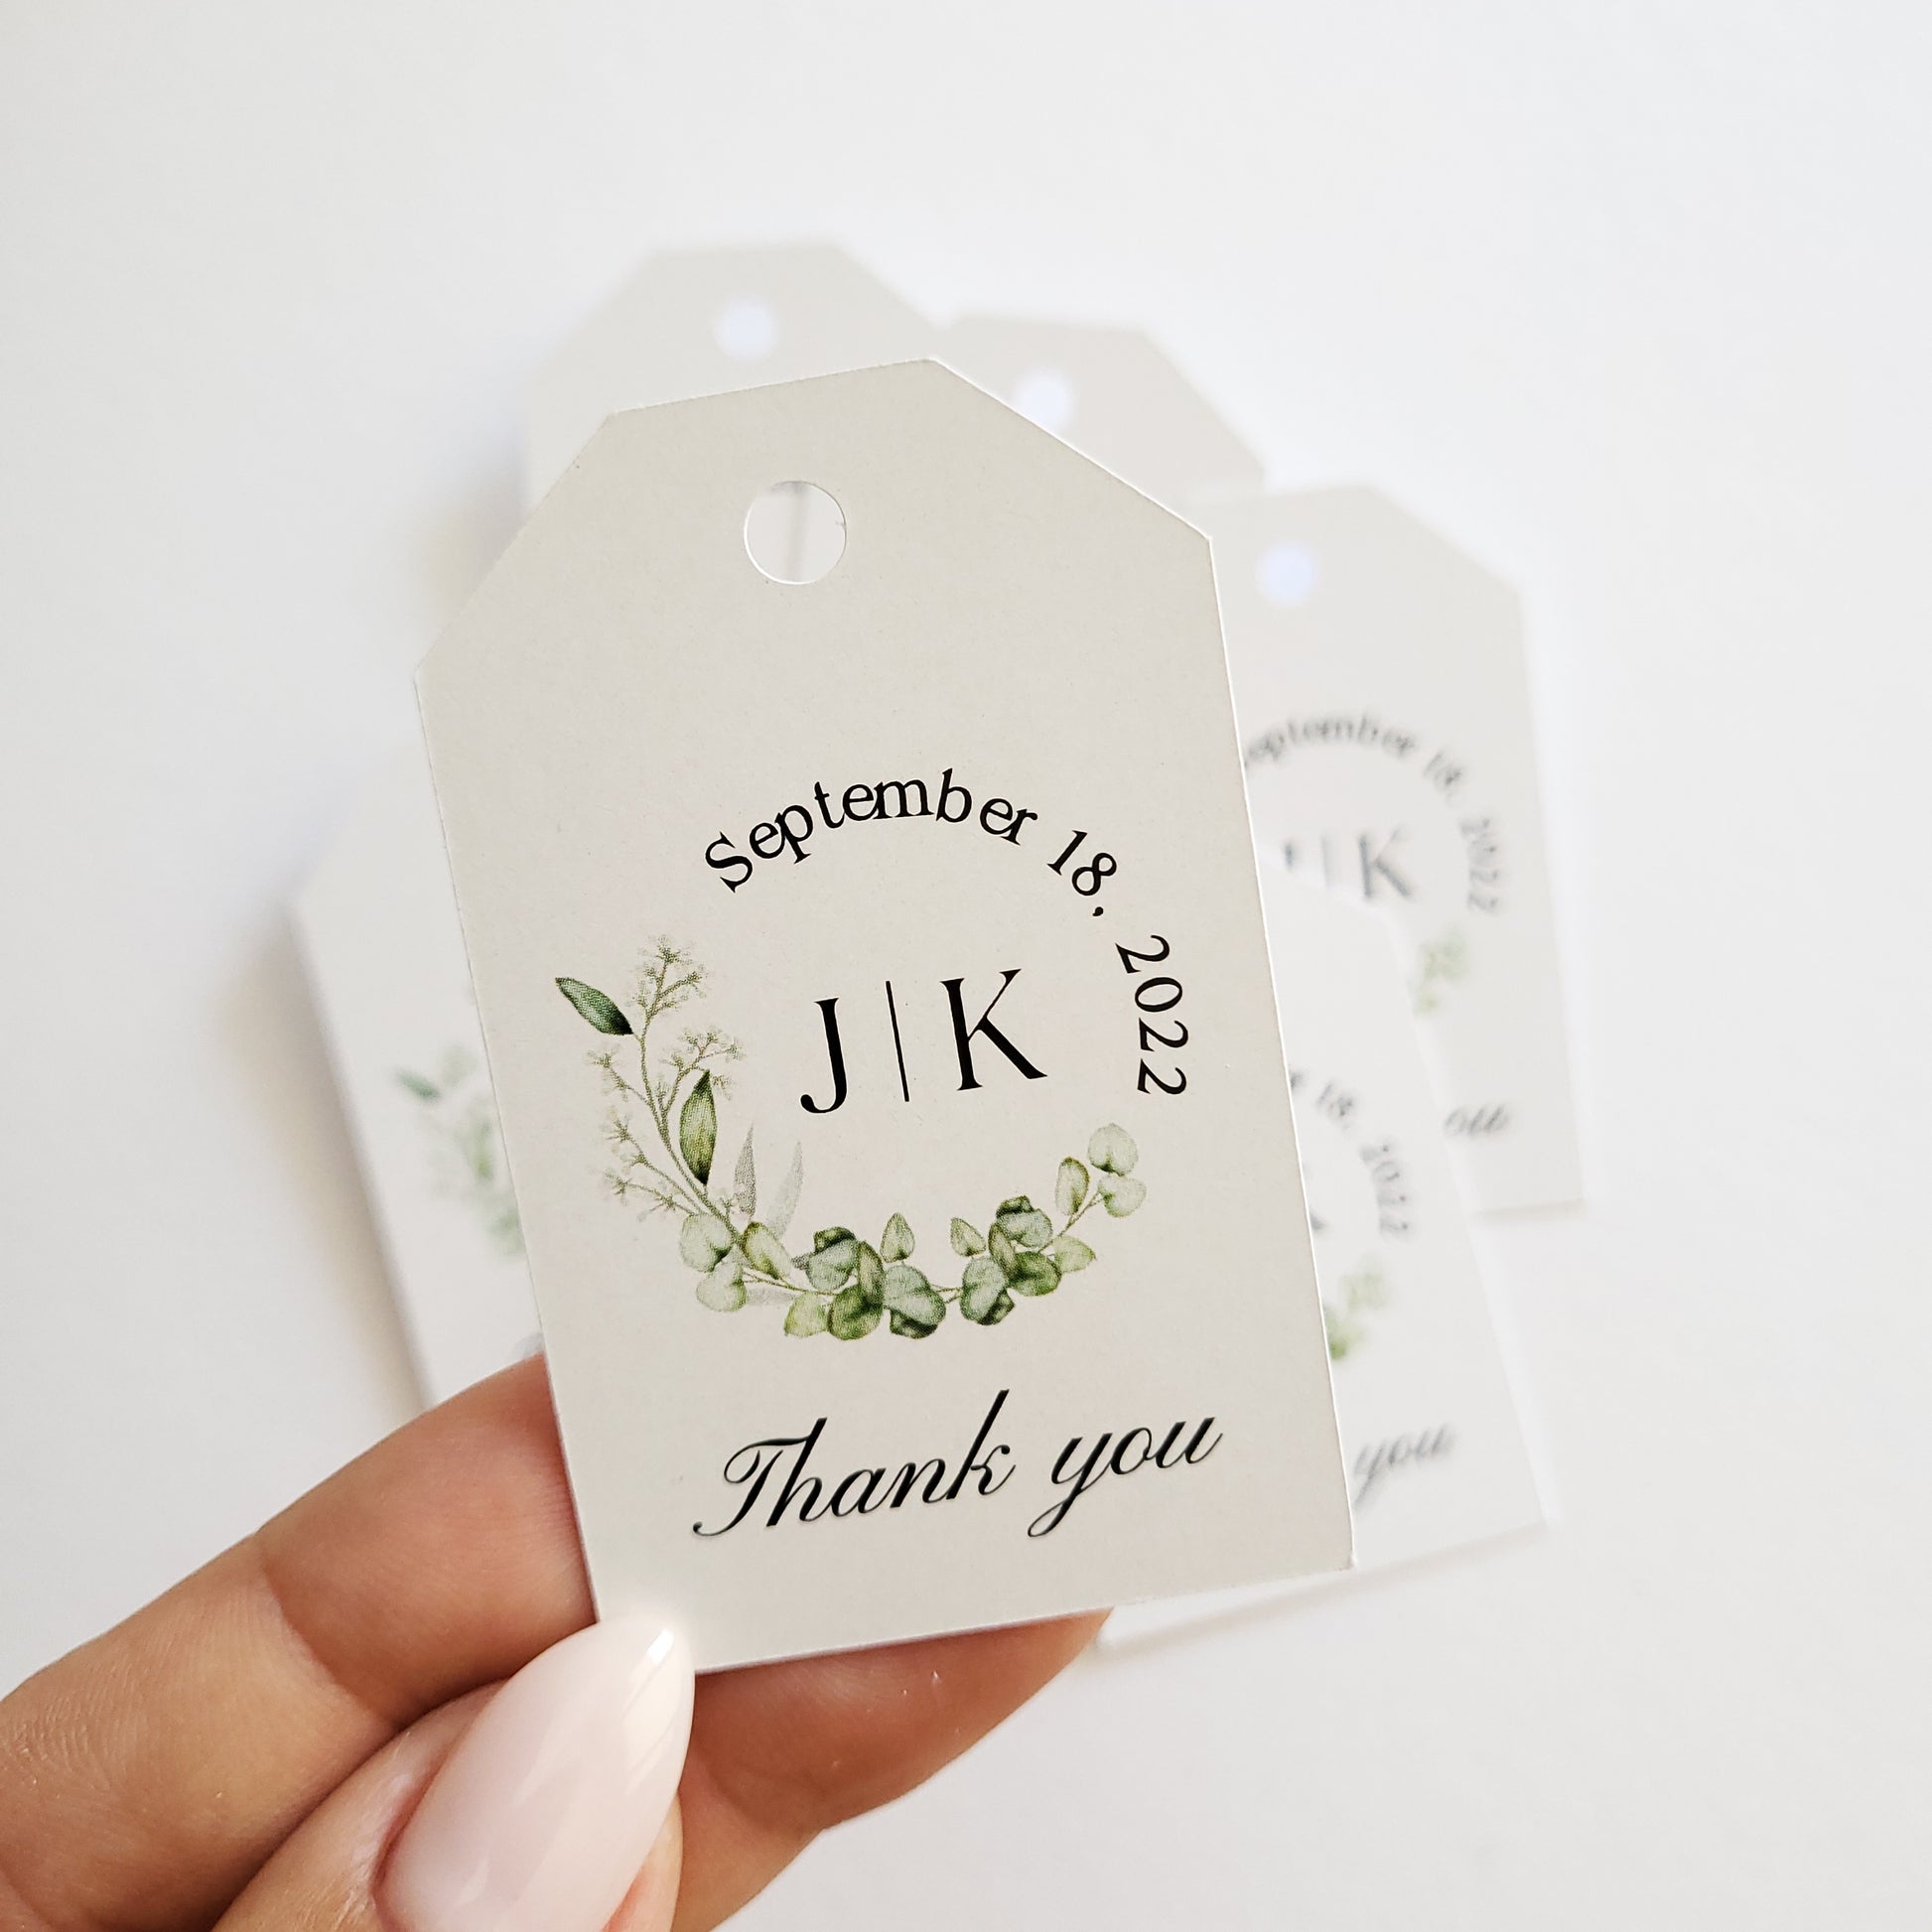 wedding monogram hang tags with greenery design - XOXOKristen